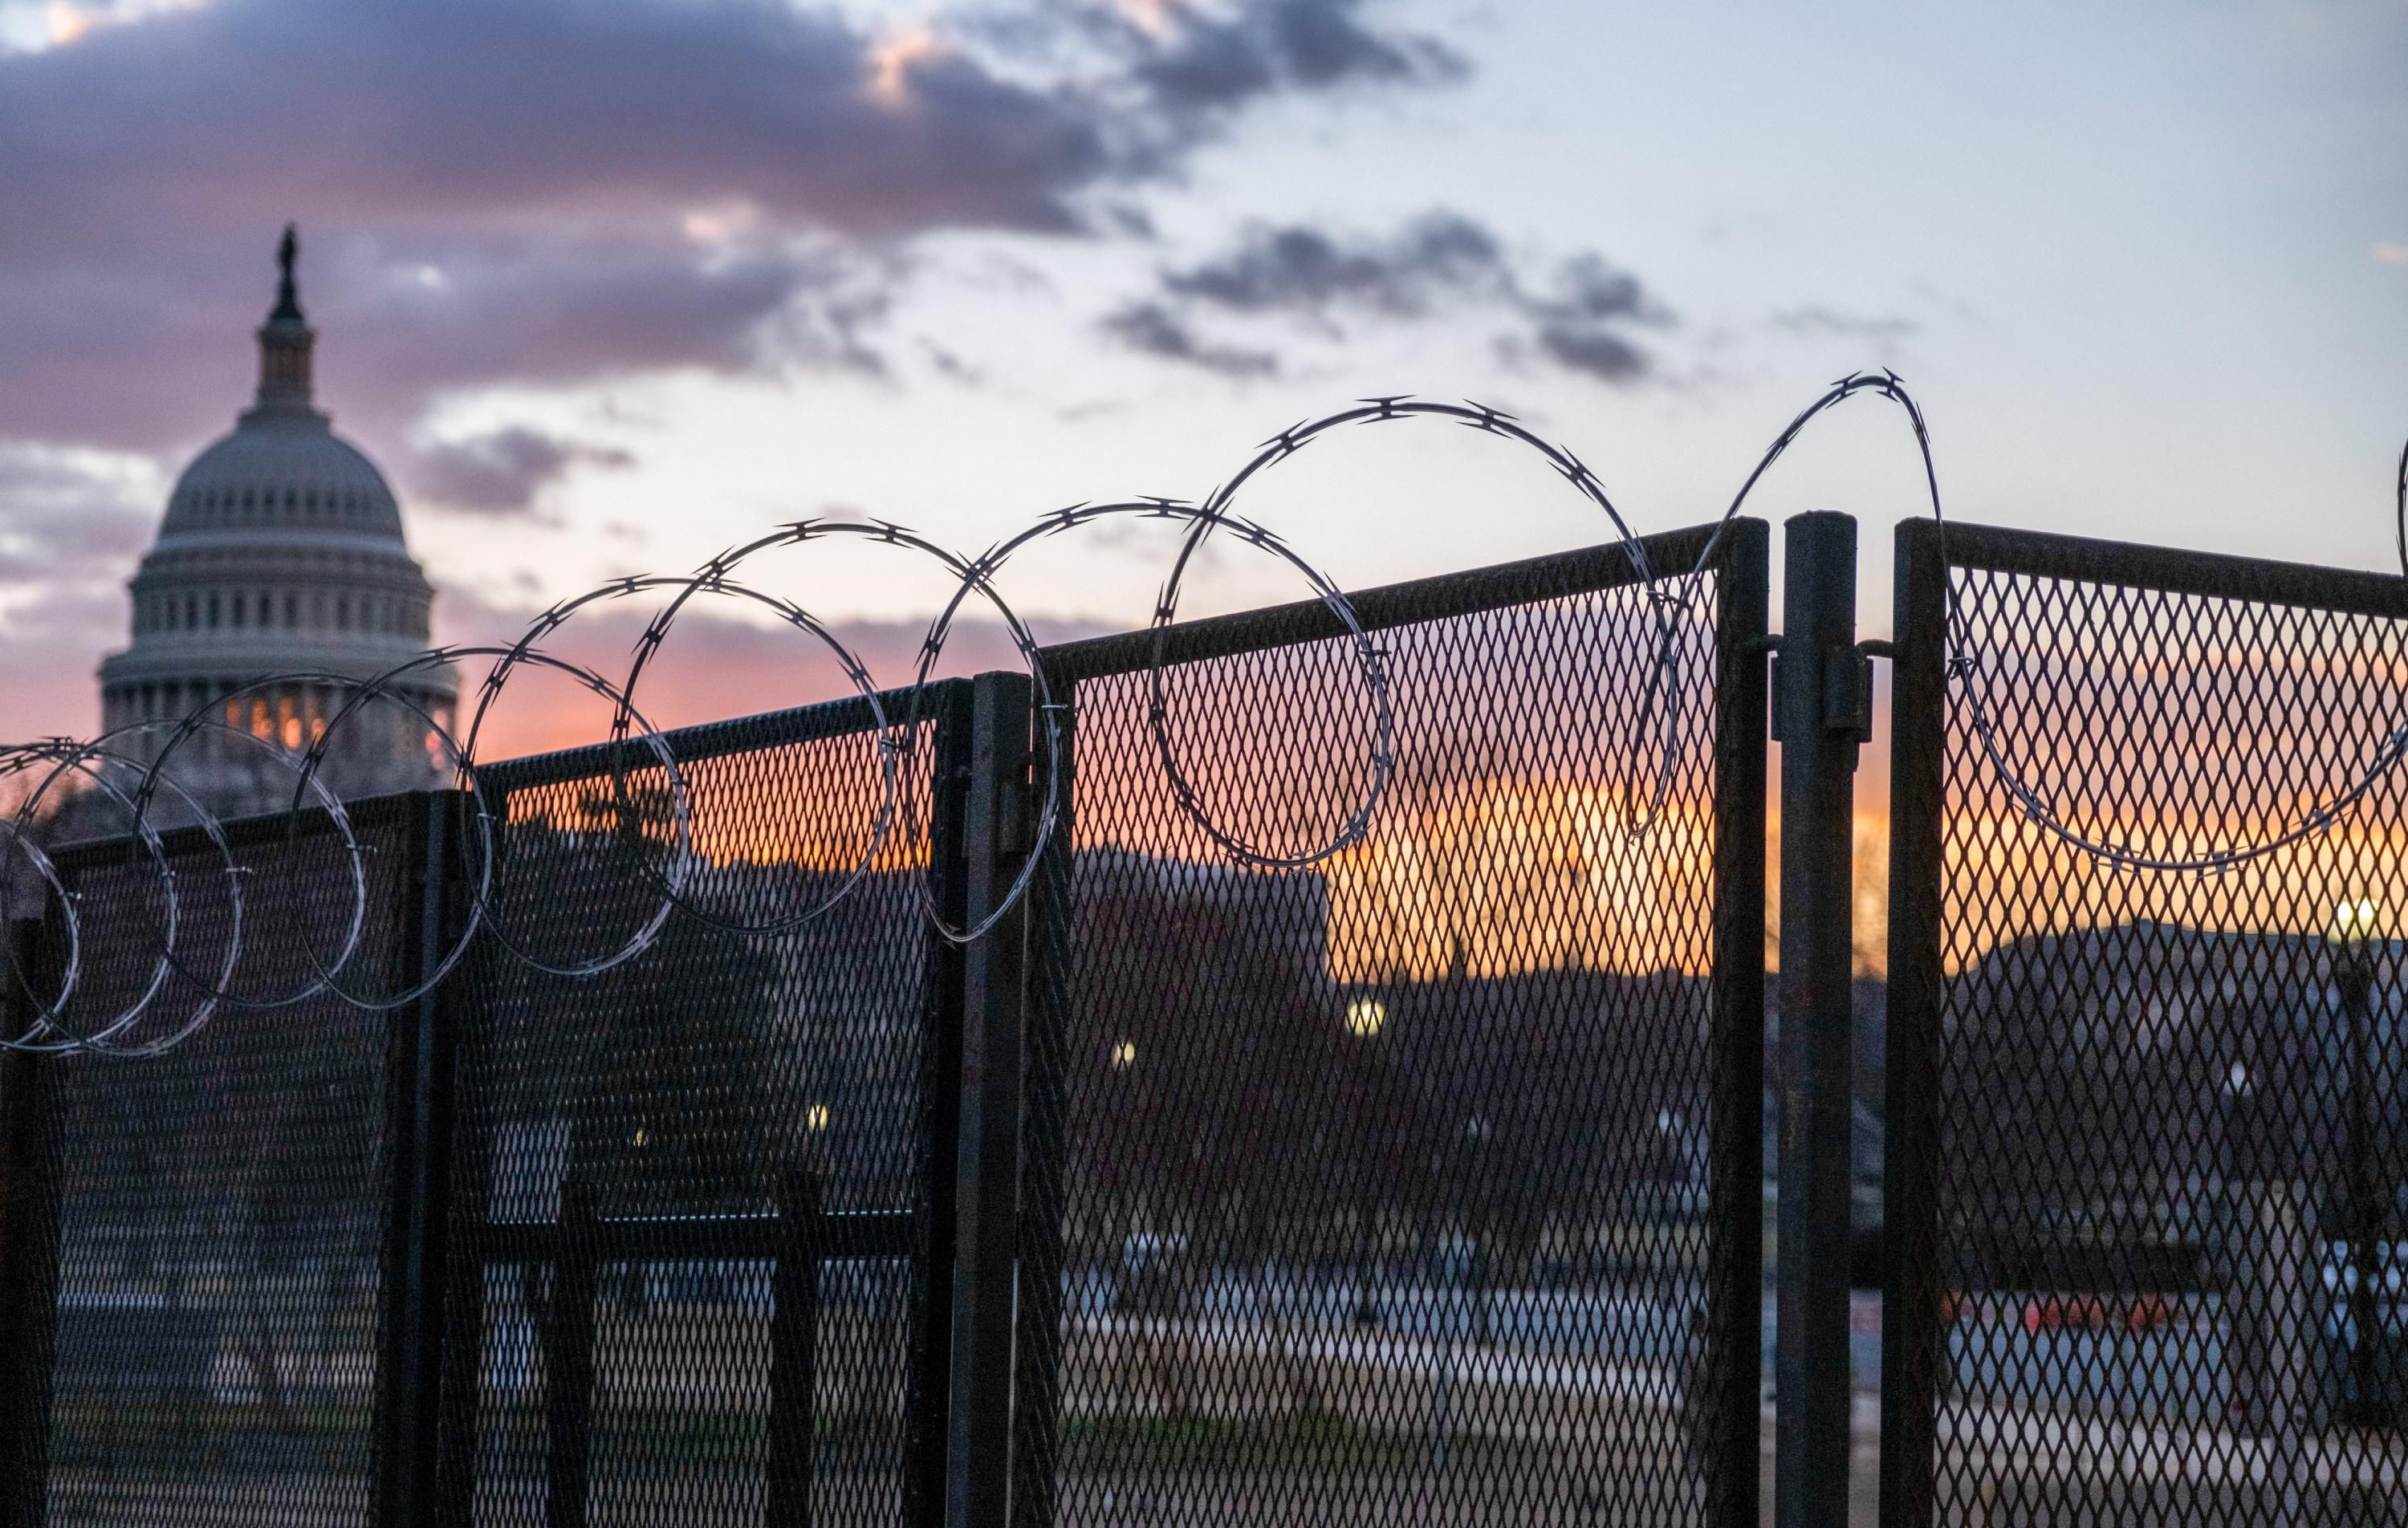 Razor fence surrounding U.S. Capitol